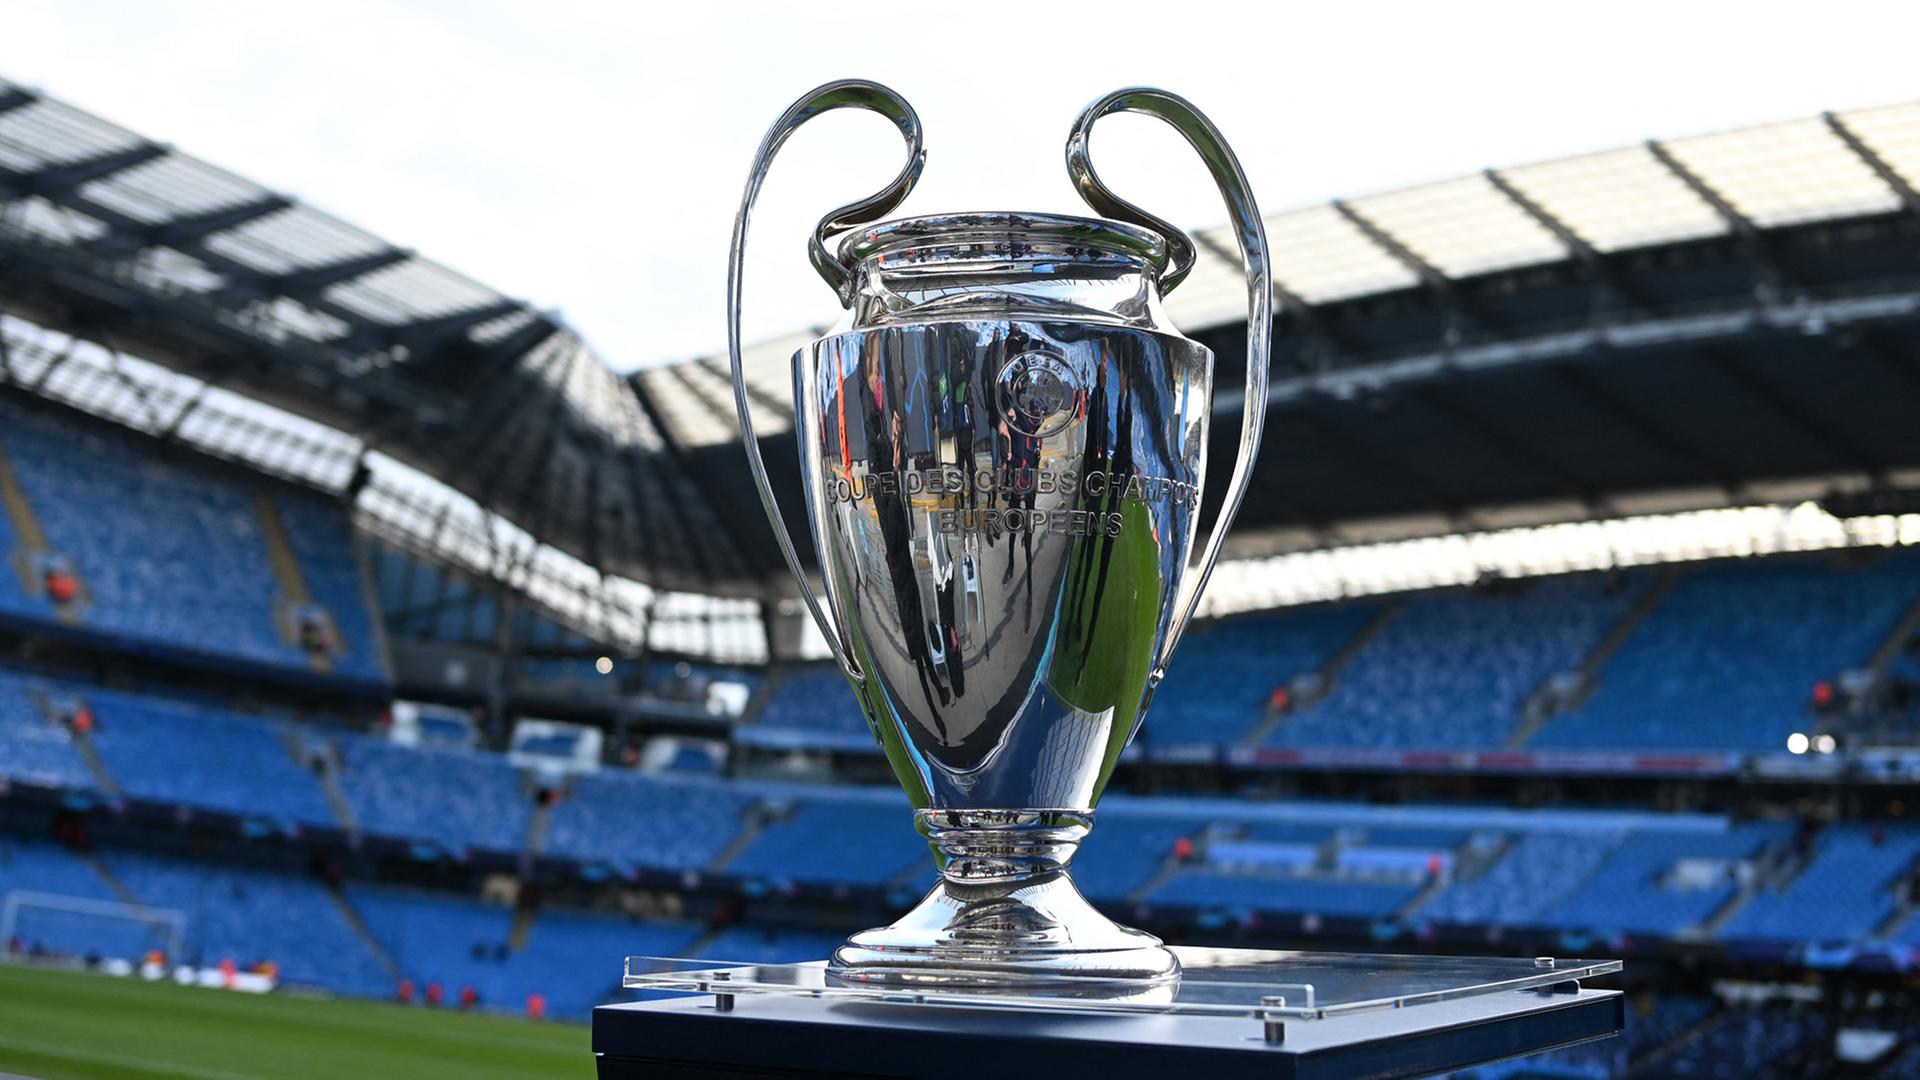 Der Pokal der Champions League